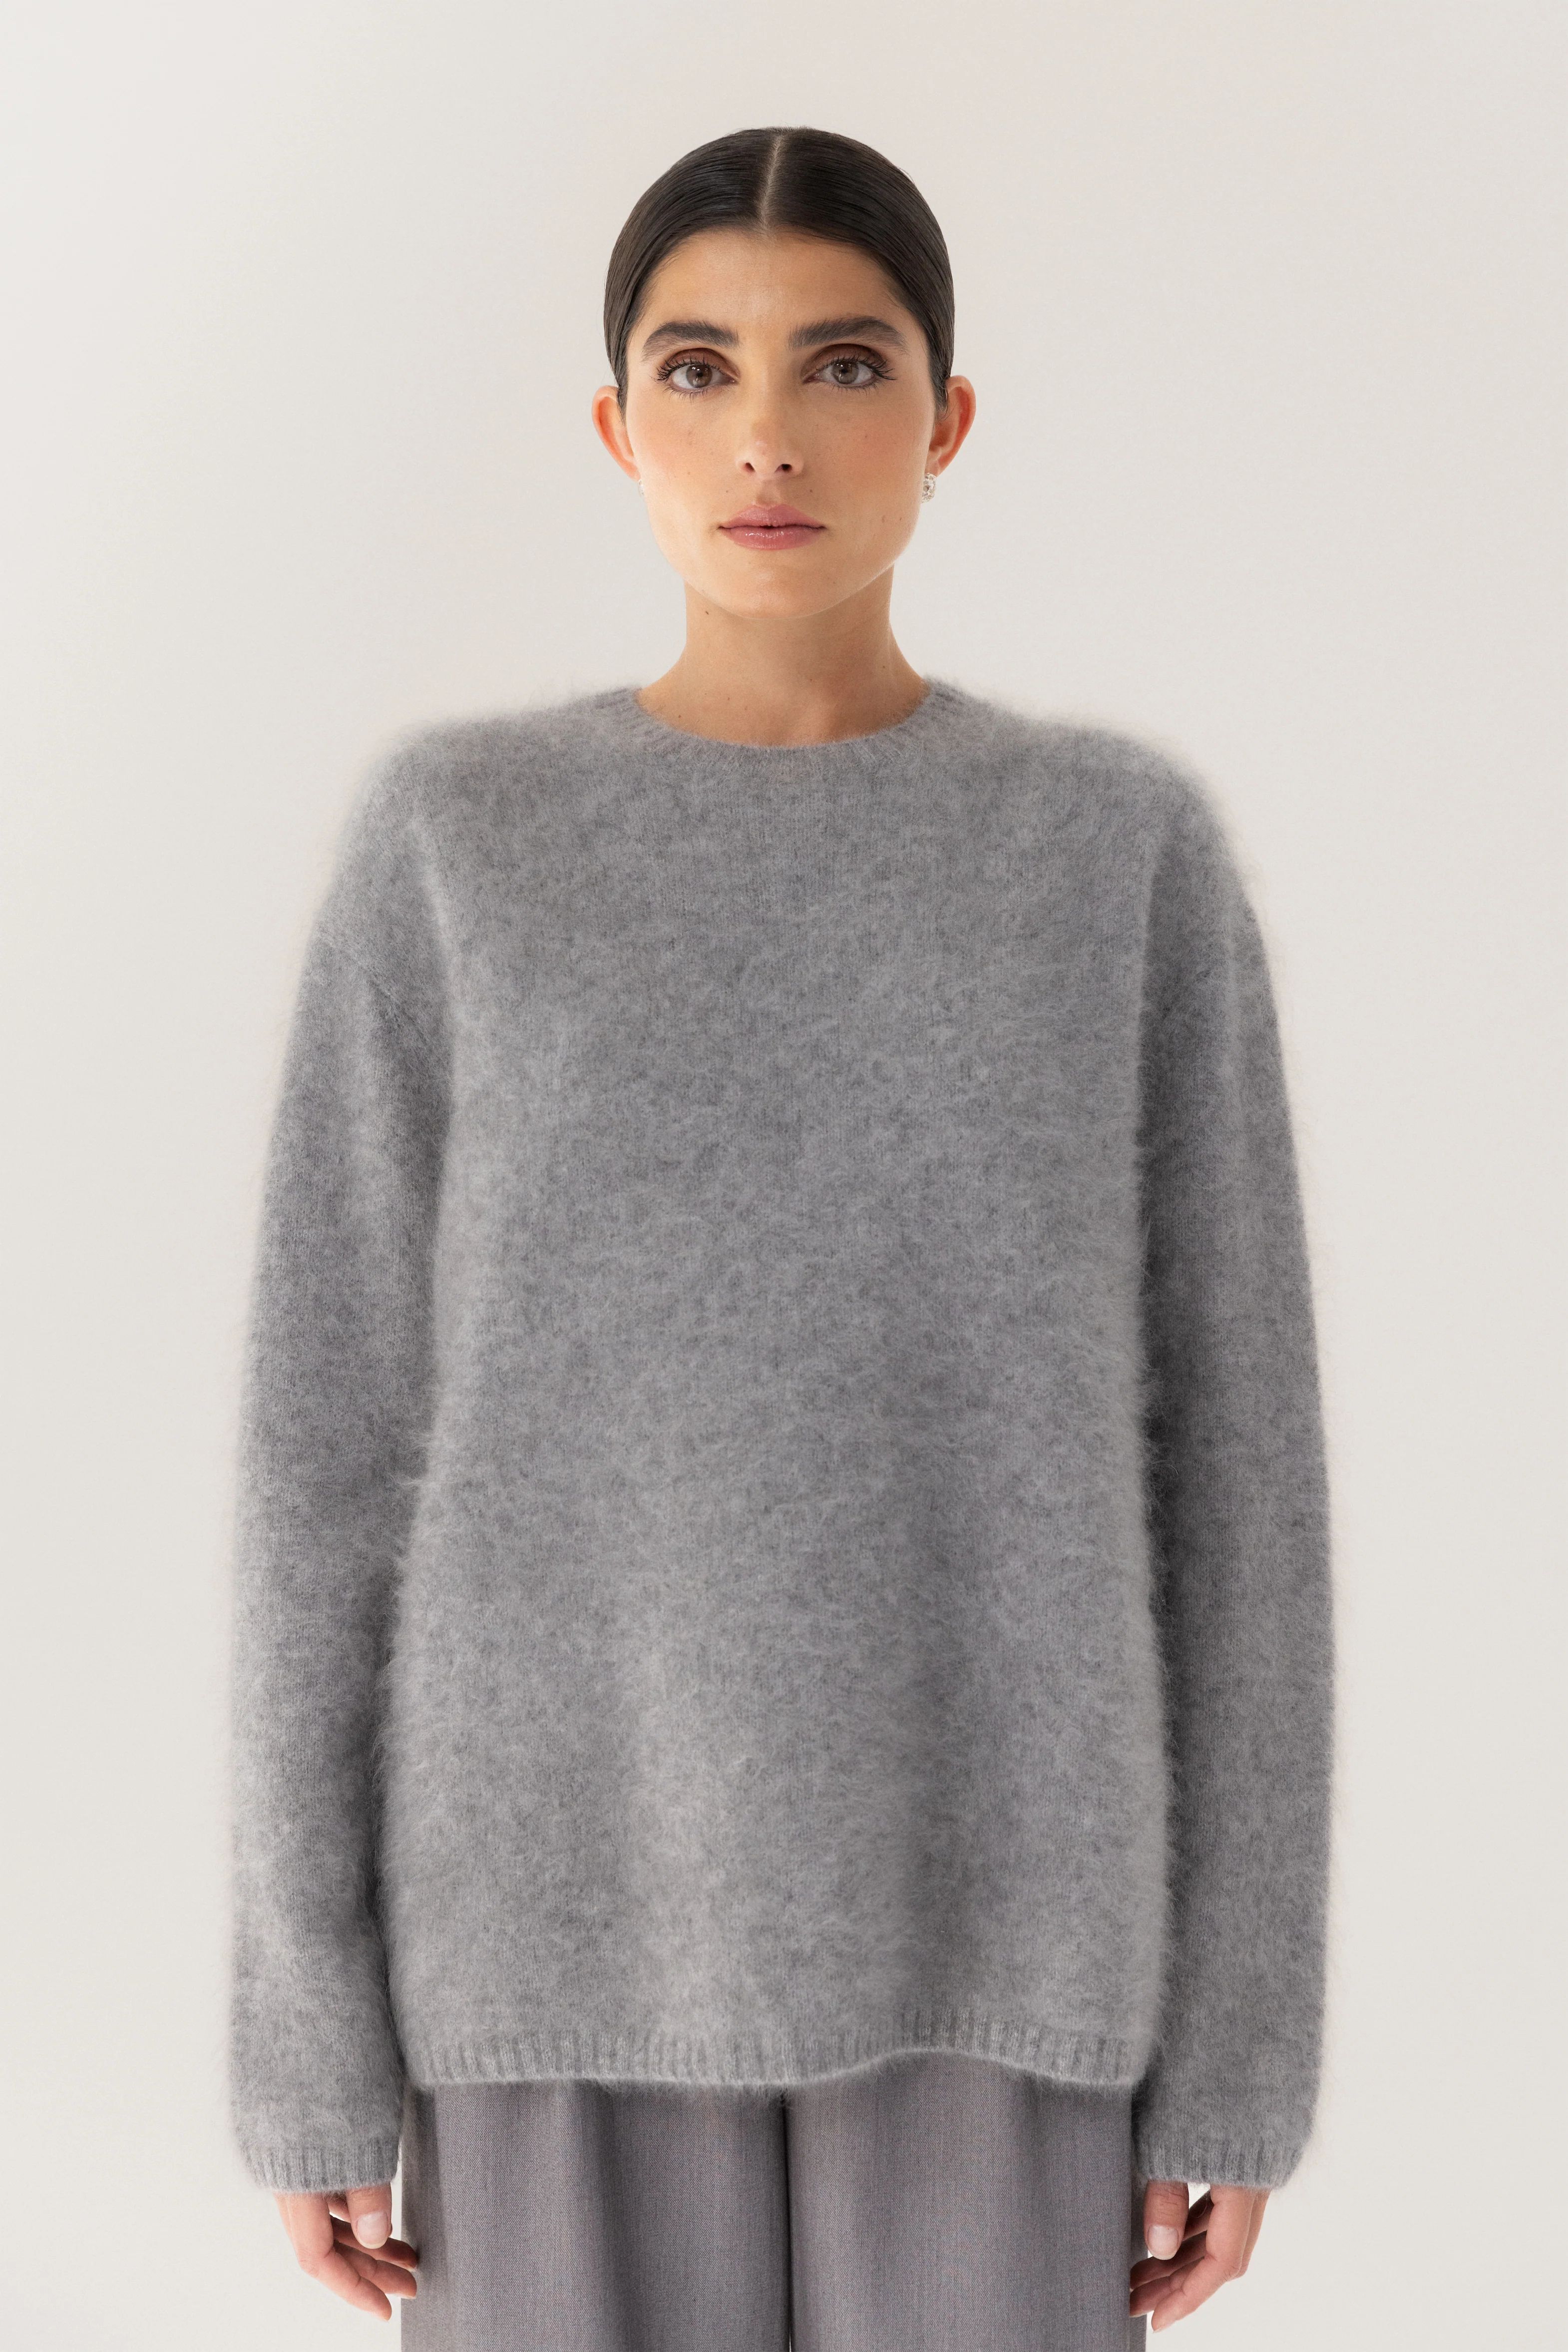 Floy Cashmere Sweater, grey | Almada Label